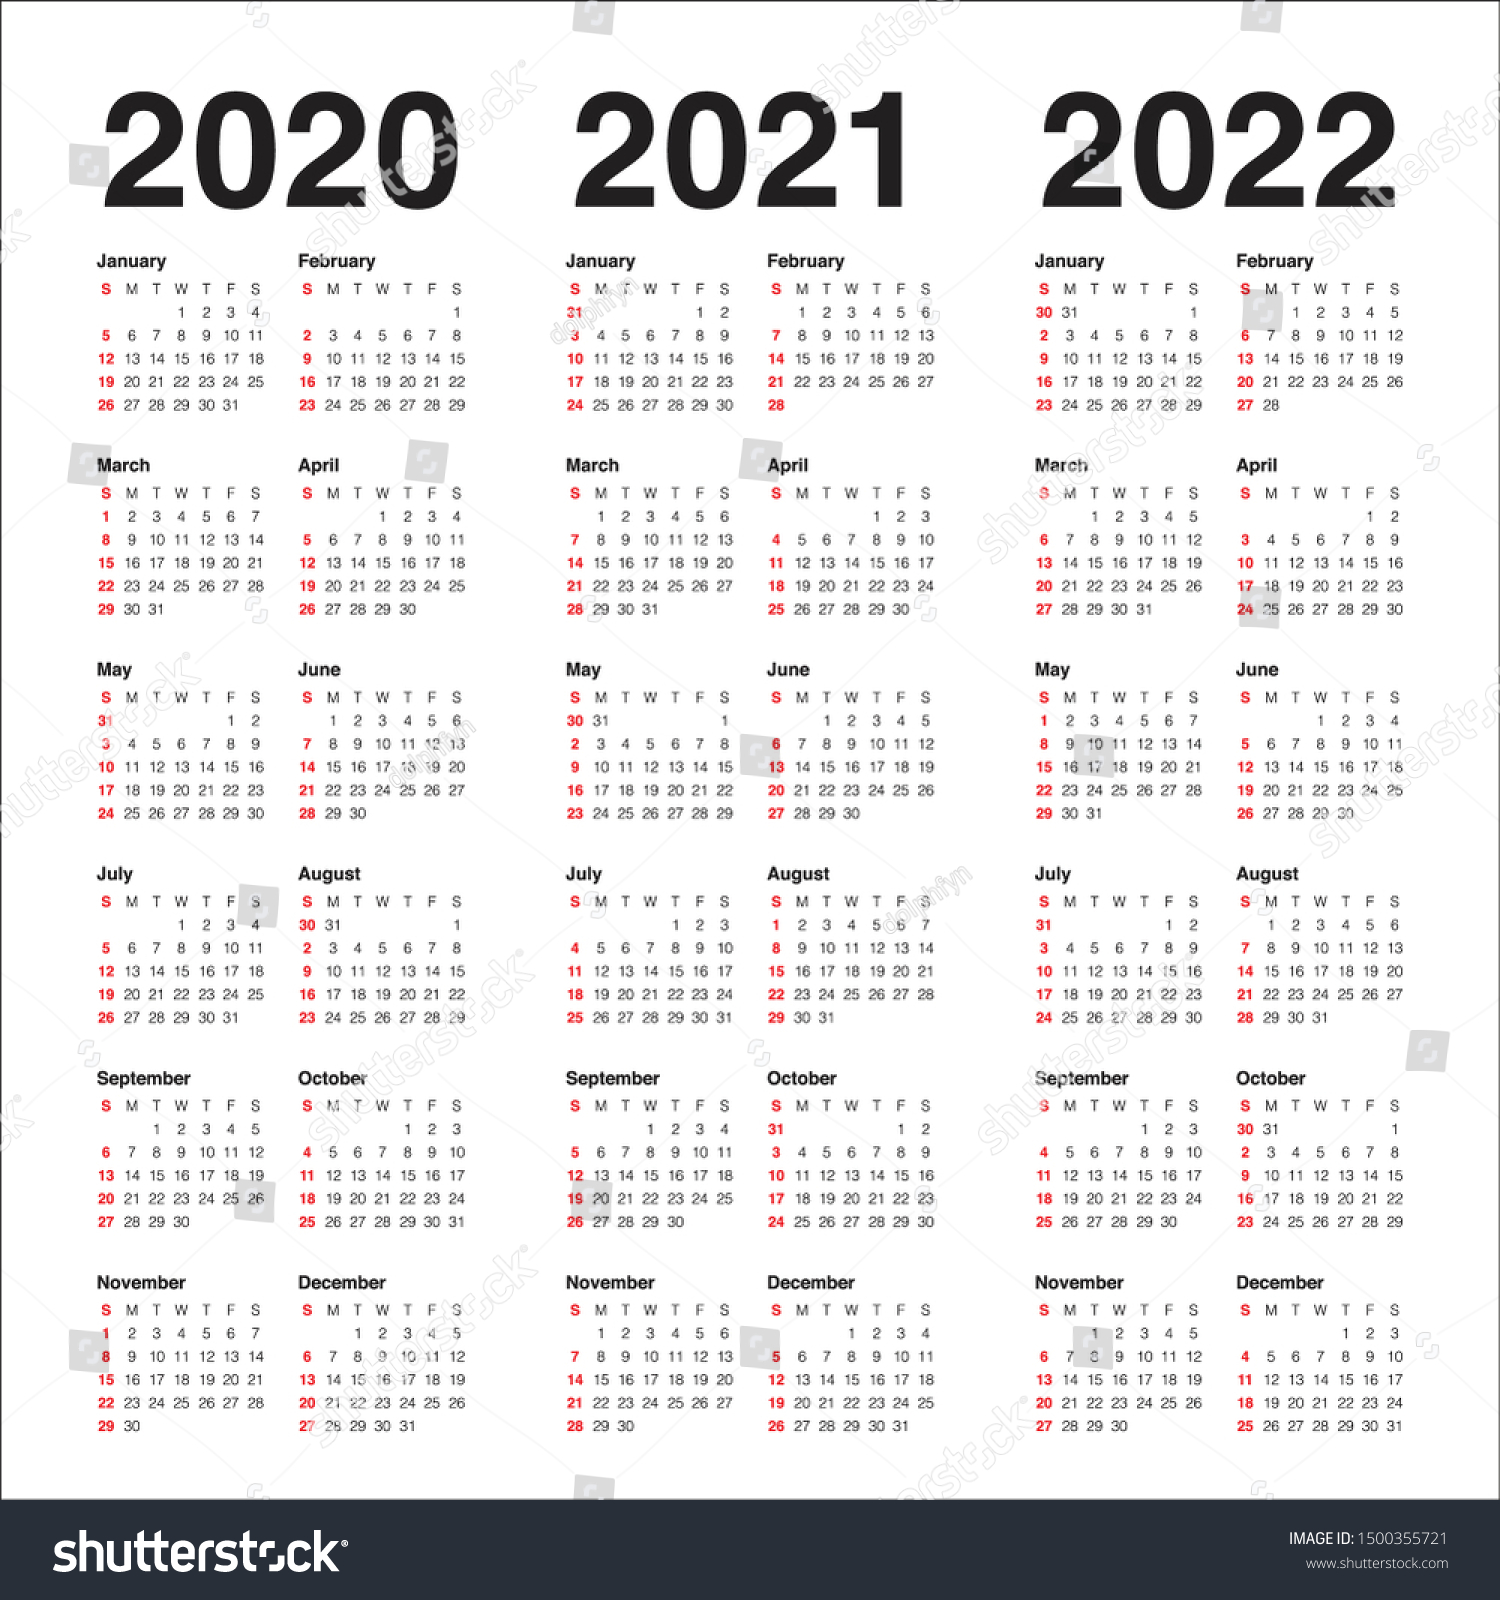 Cua Fall 2022 Calendar Year 2020 2021 2022 Calendar Vector Stock Vector (Royalty Free) 1500355721